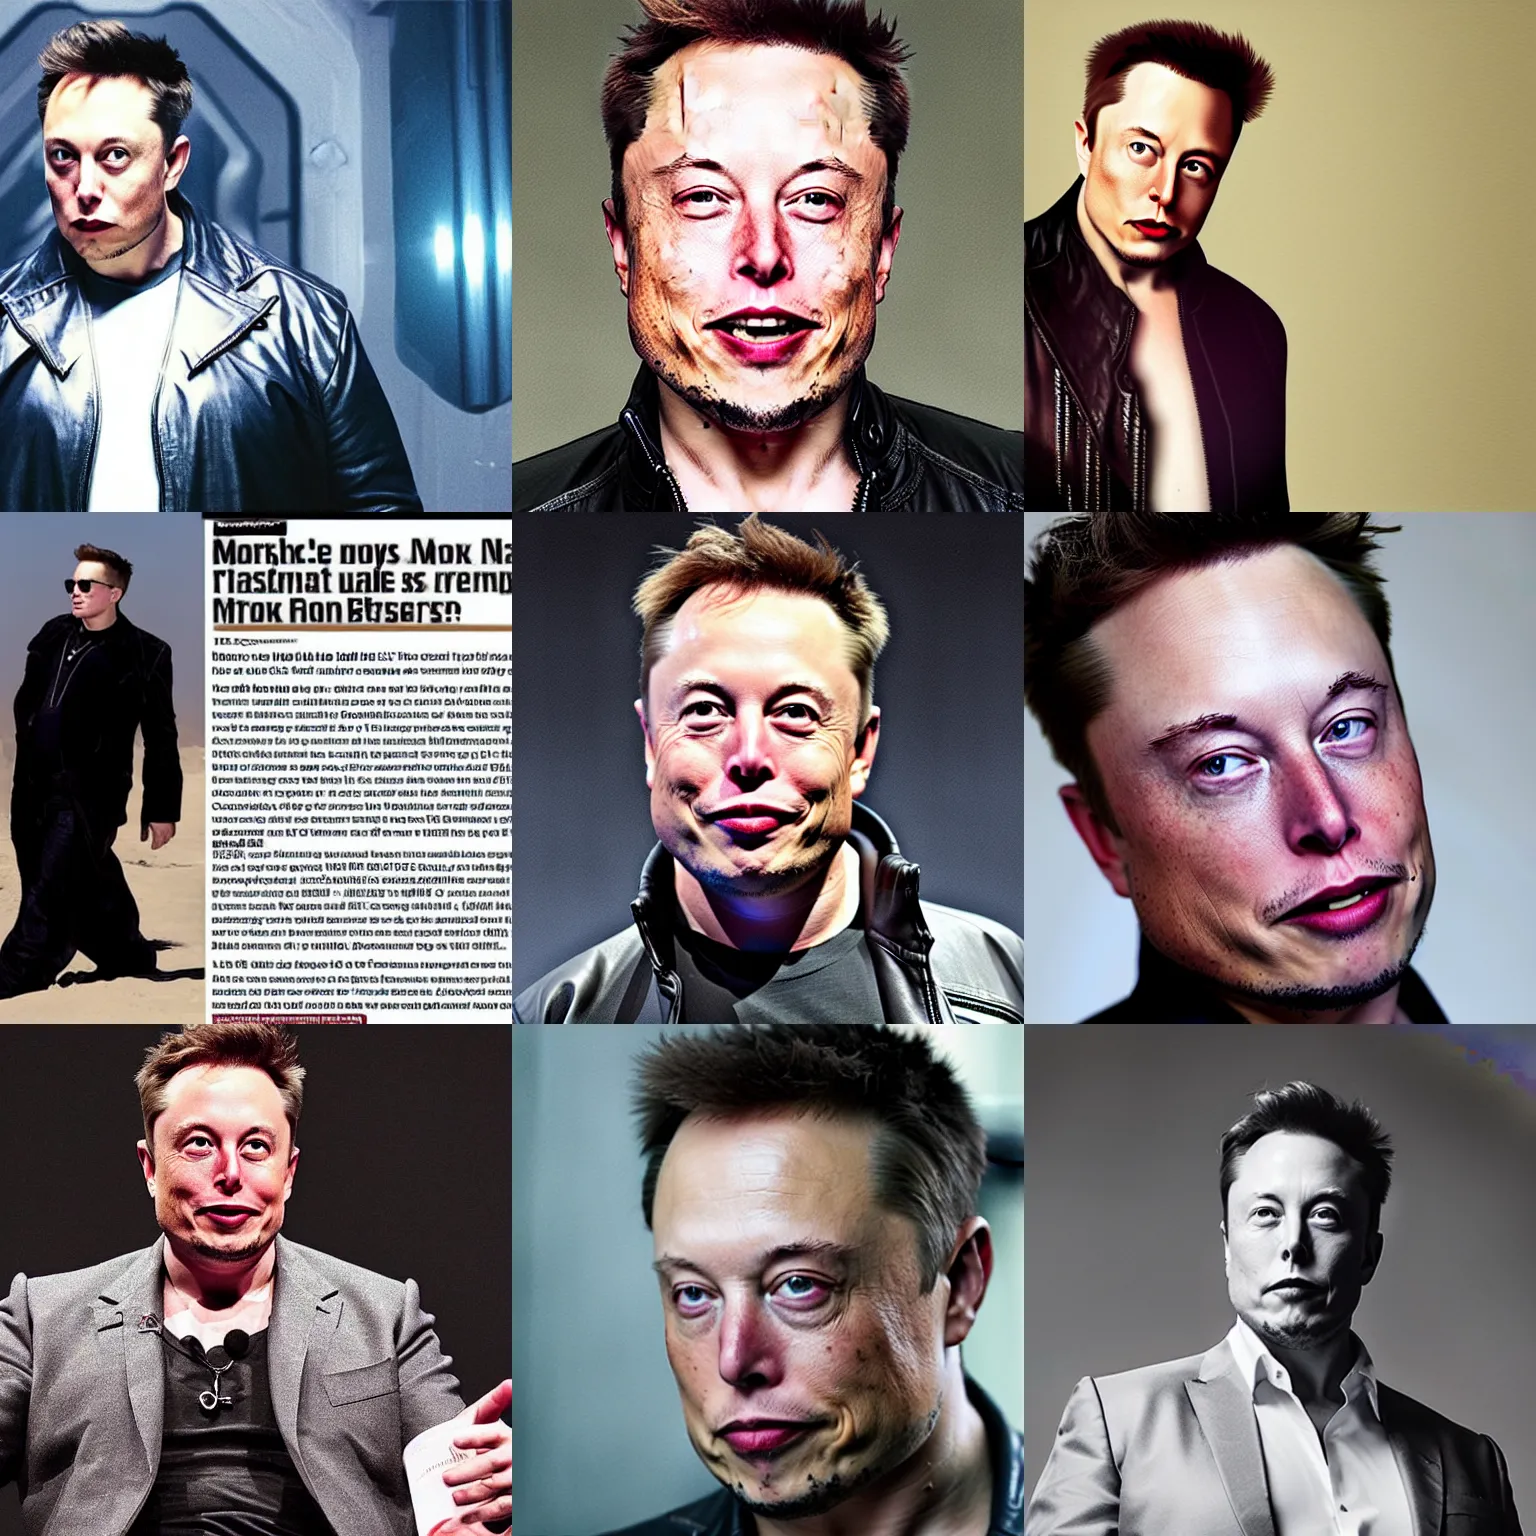 Prompt: “photo of Elon musk as Morpheus”